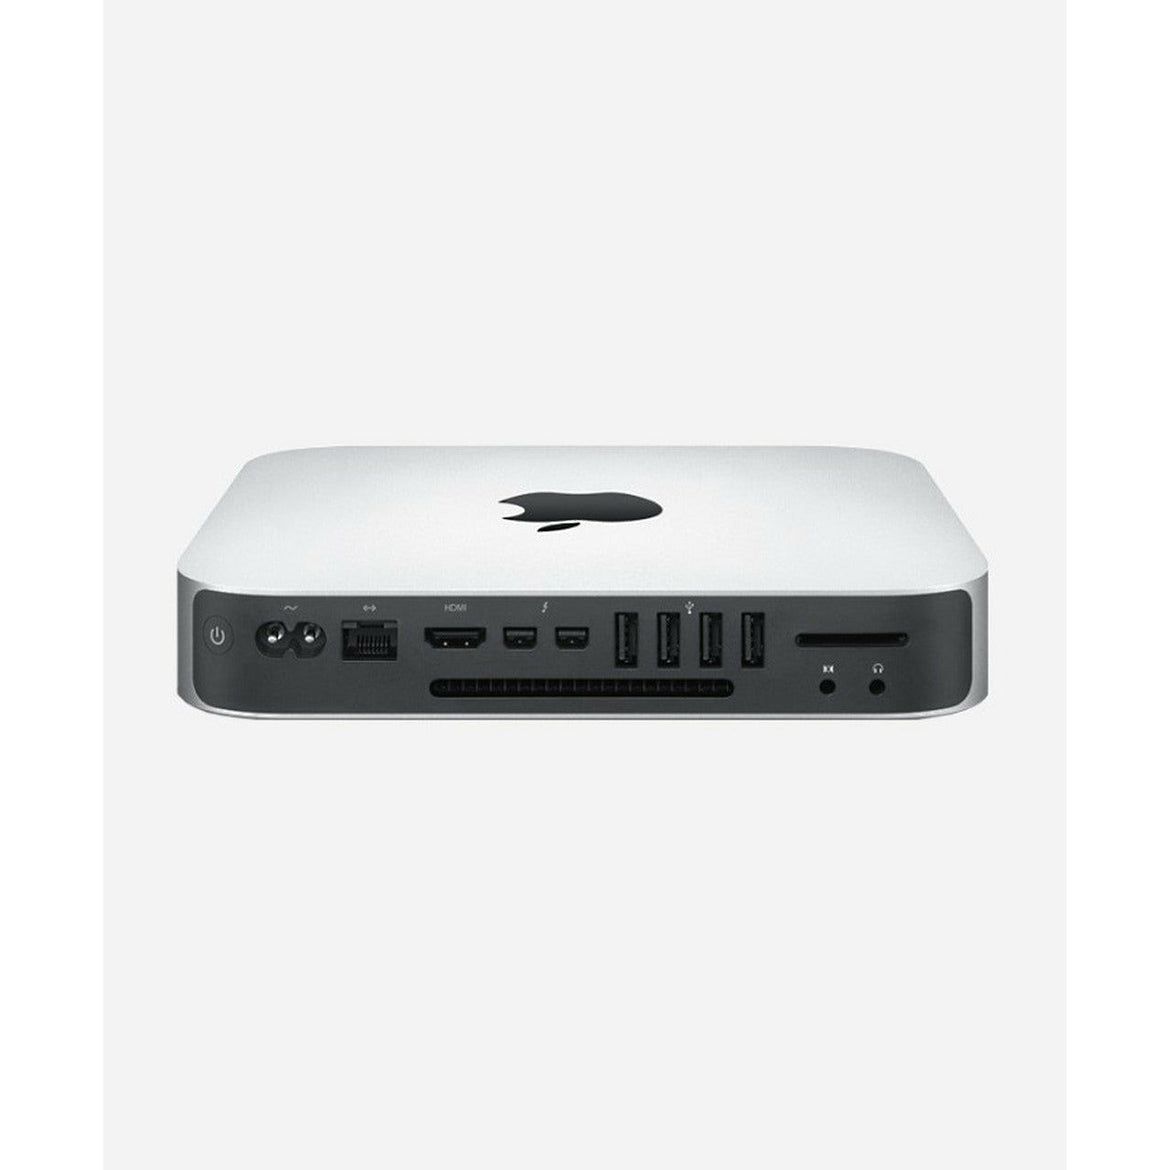 Apple Mac Mini 2.8Ghz i5 Dual-Core 8GB RAM 1 TB HDD (Silver)